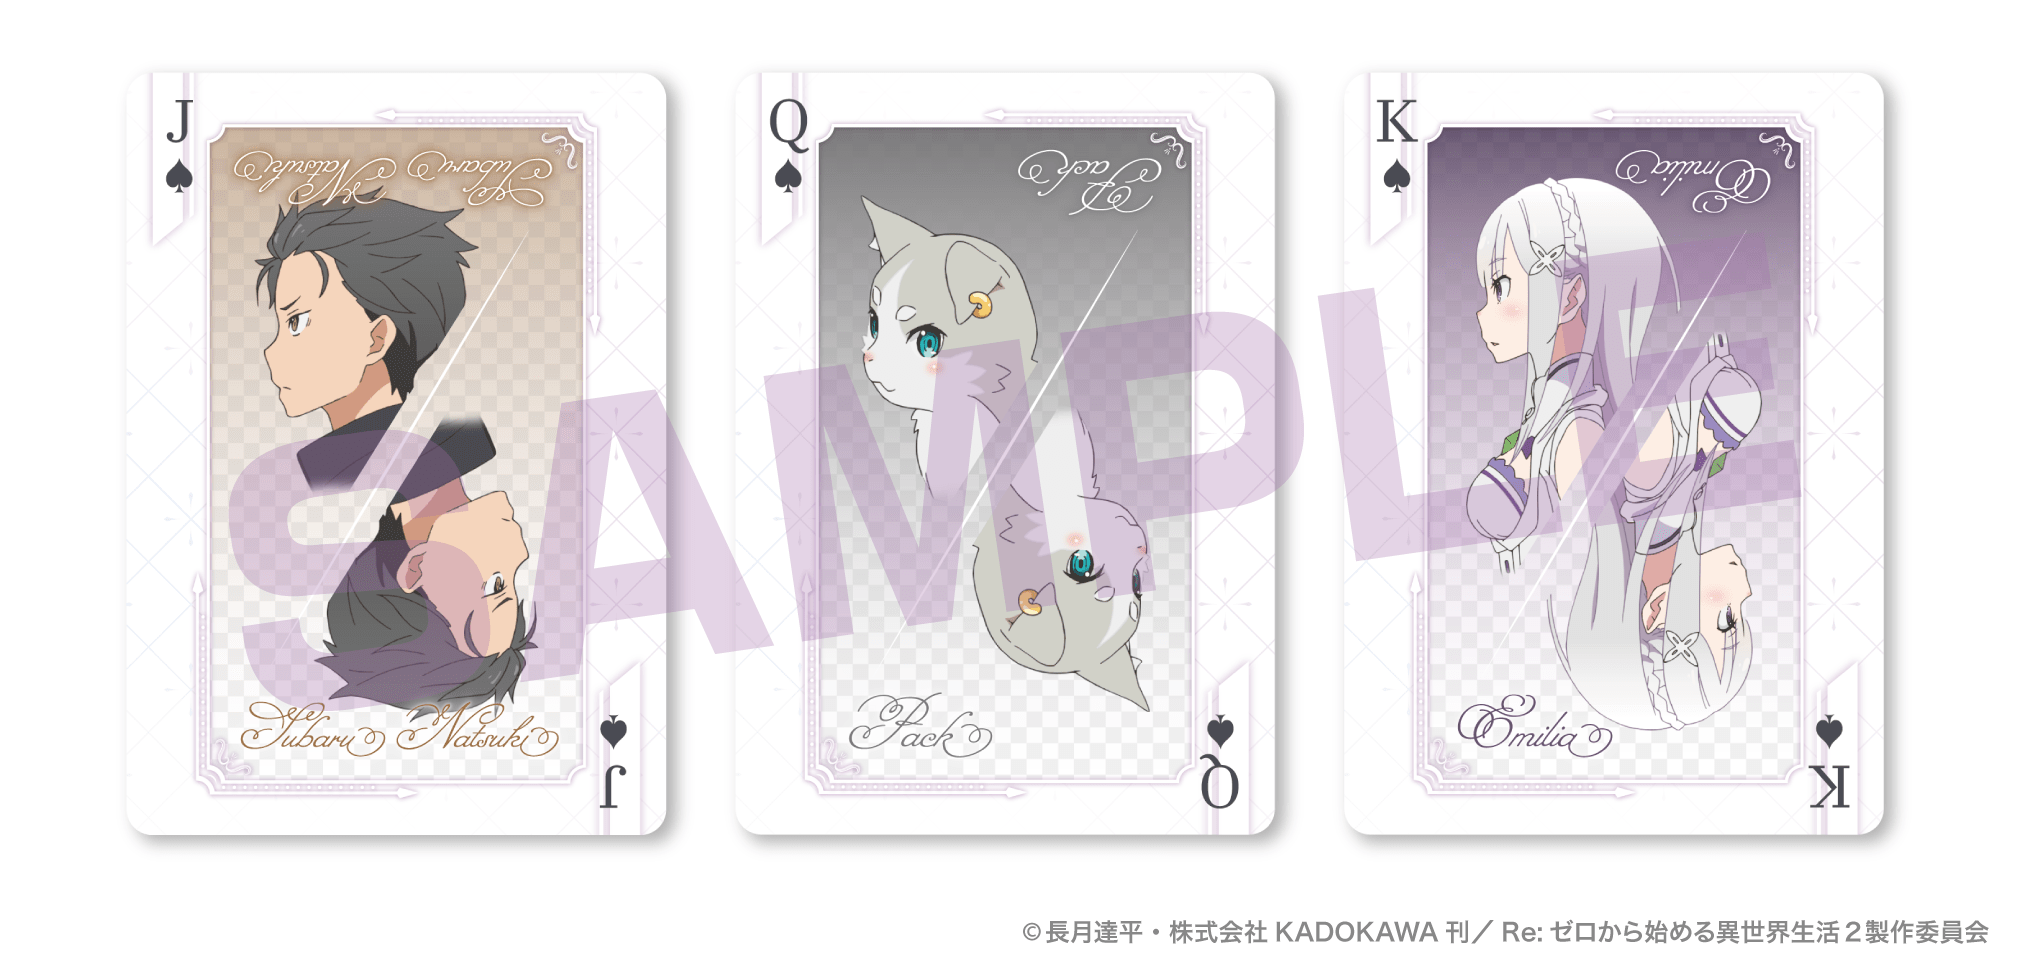 playing_card_rezero_02